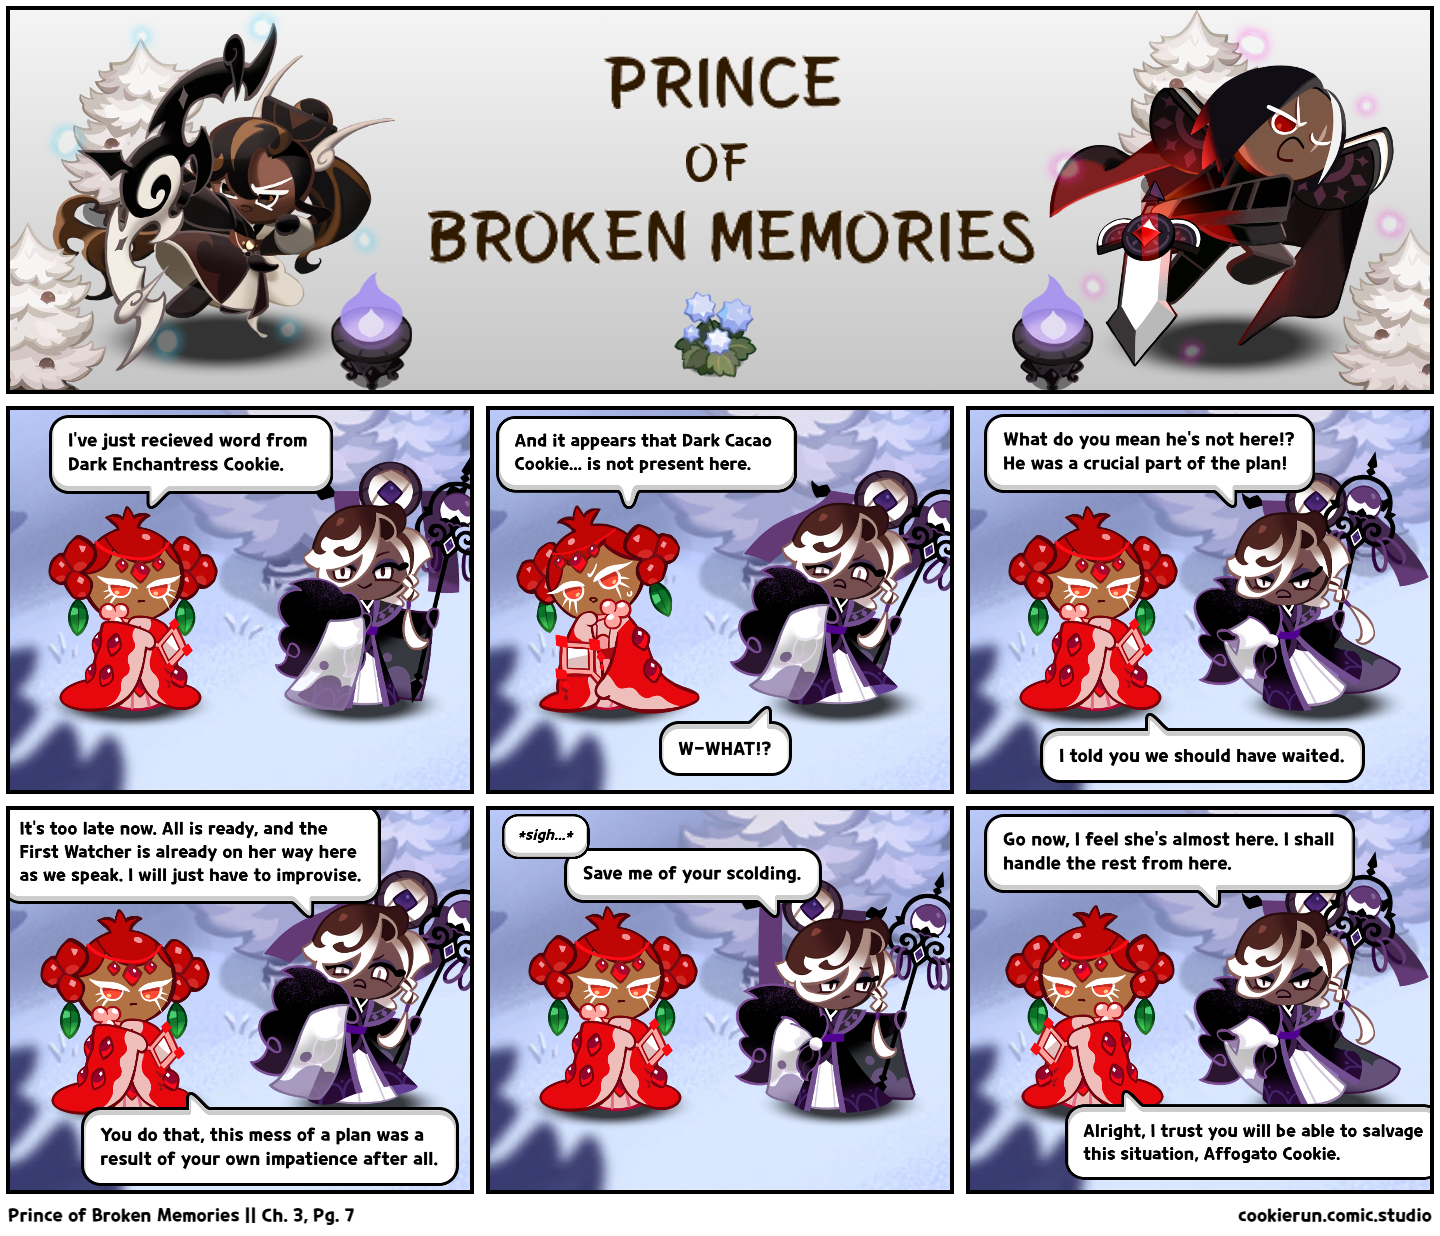 Prince of Broken Memories || Ch. 3, Pg. 7